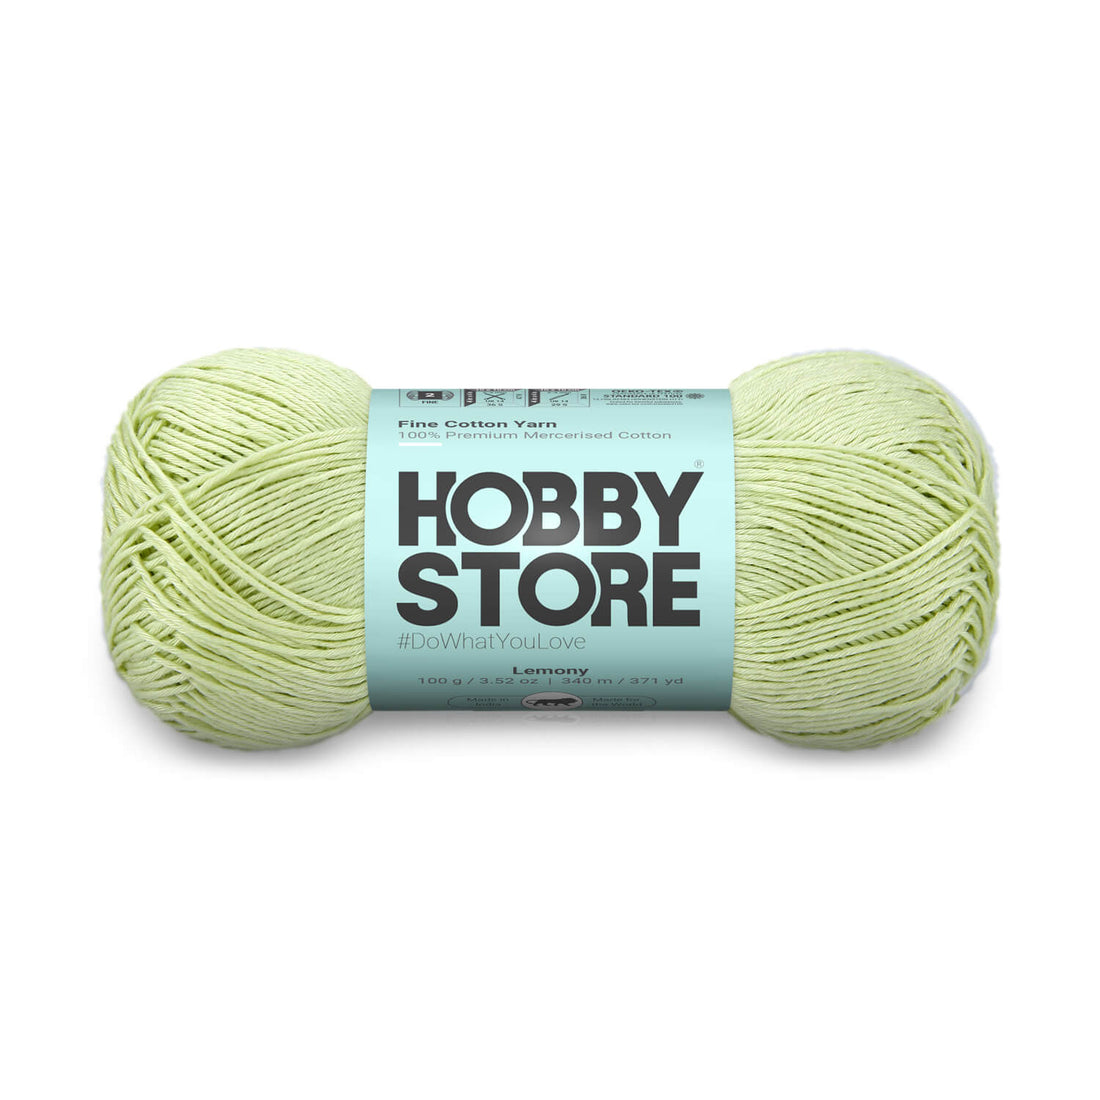 Fine Mercerised Cotton Yarn by Hobby Store - Lemony - 224